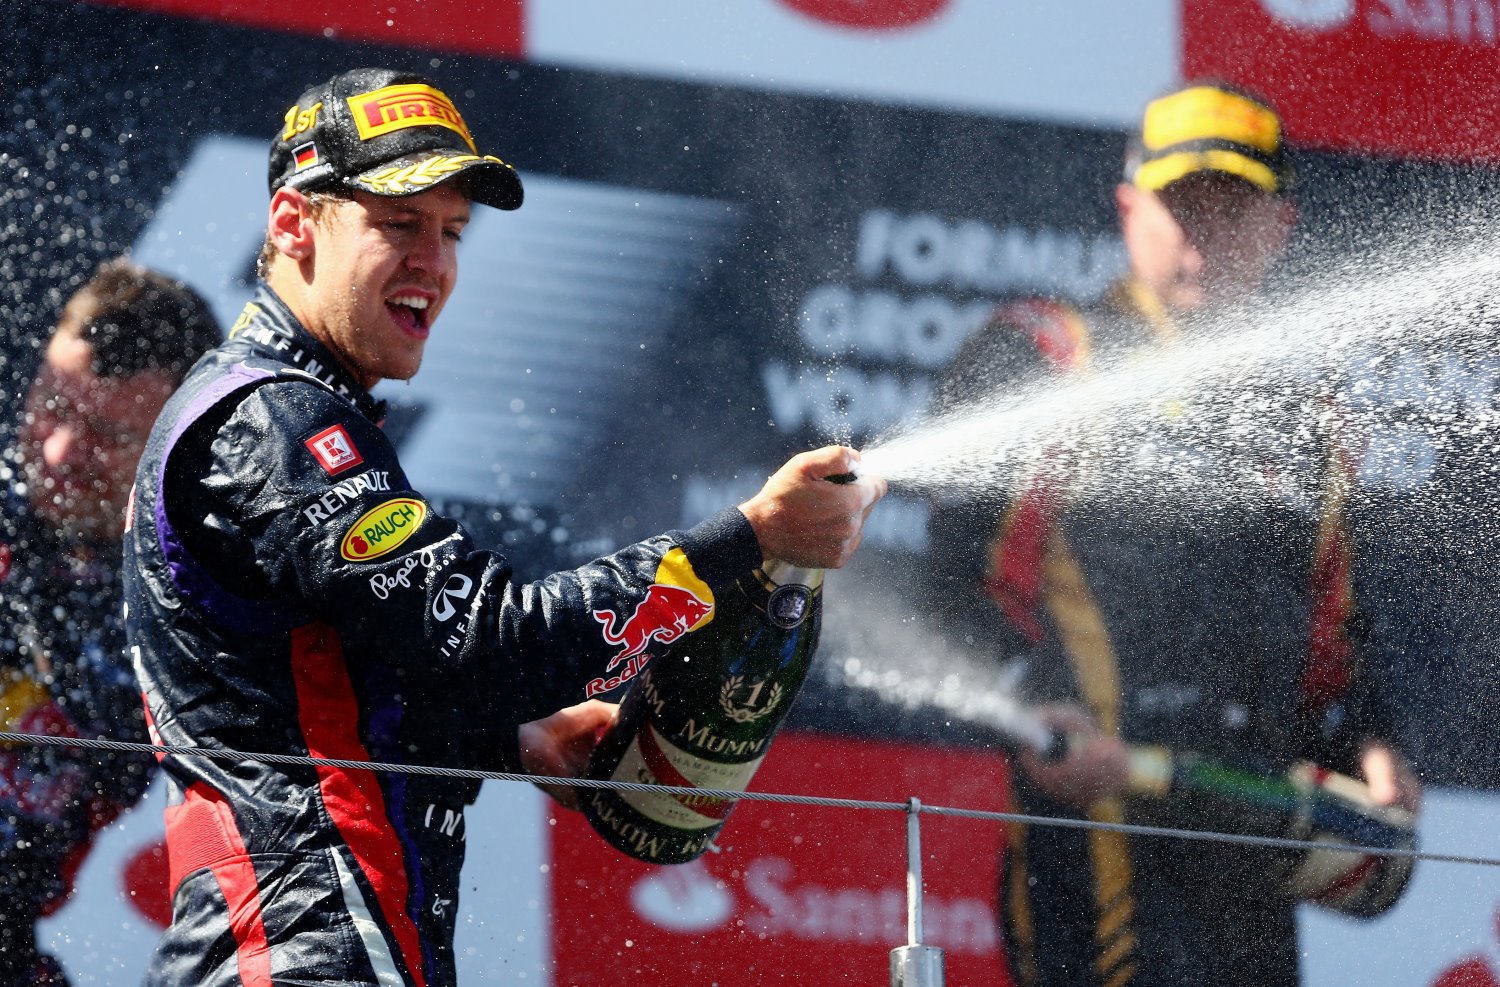 Sebastian Vettel won the last F1 race at Nurburgring in 2013